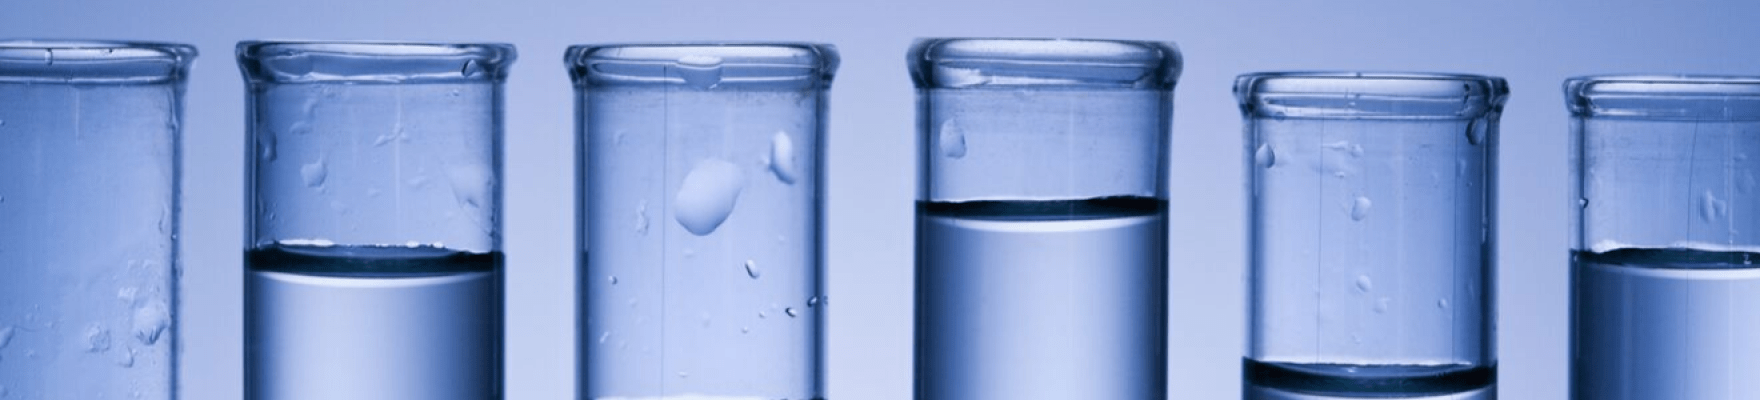 clear liquid in test tube